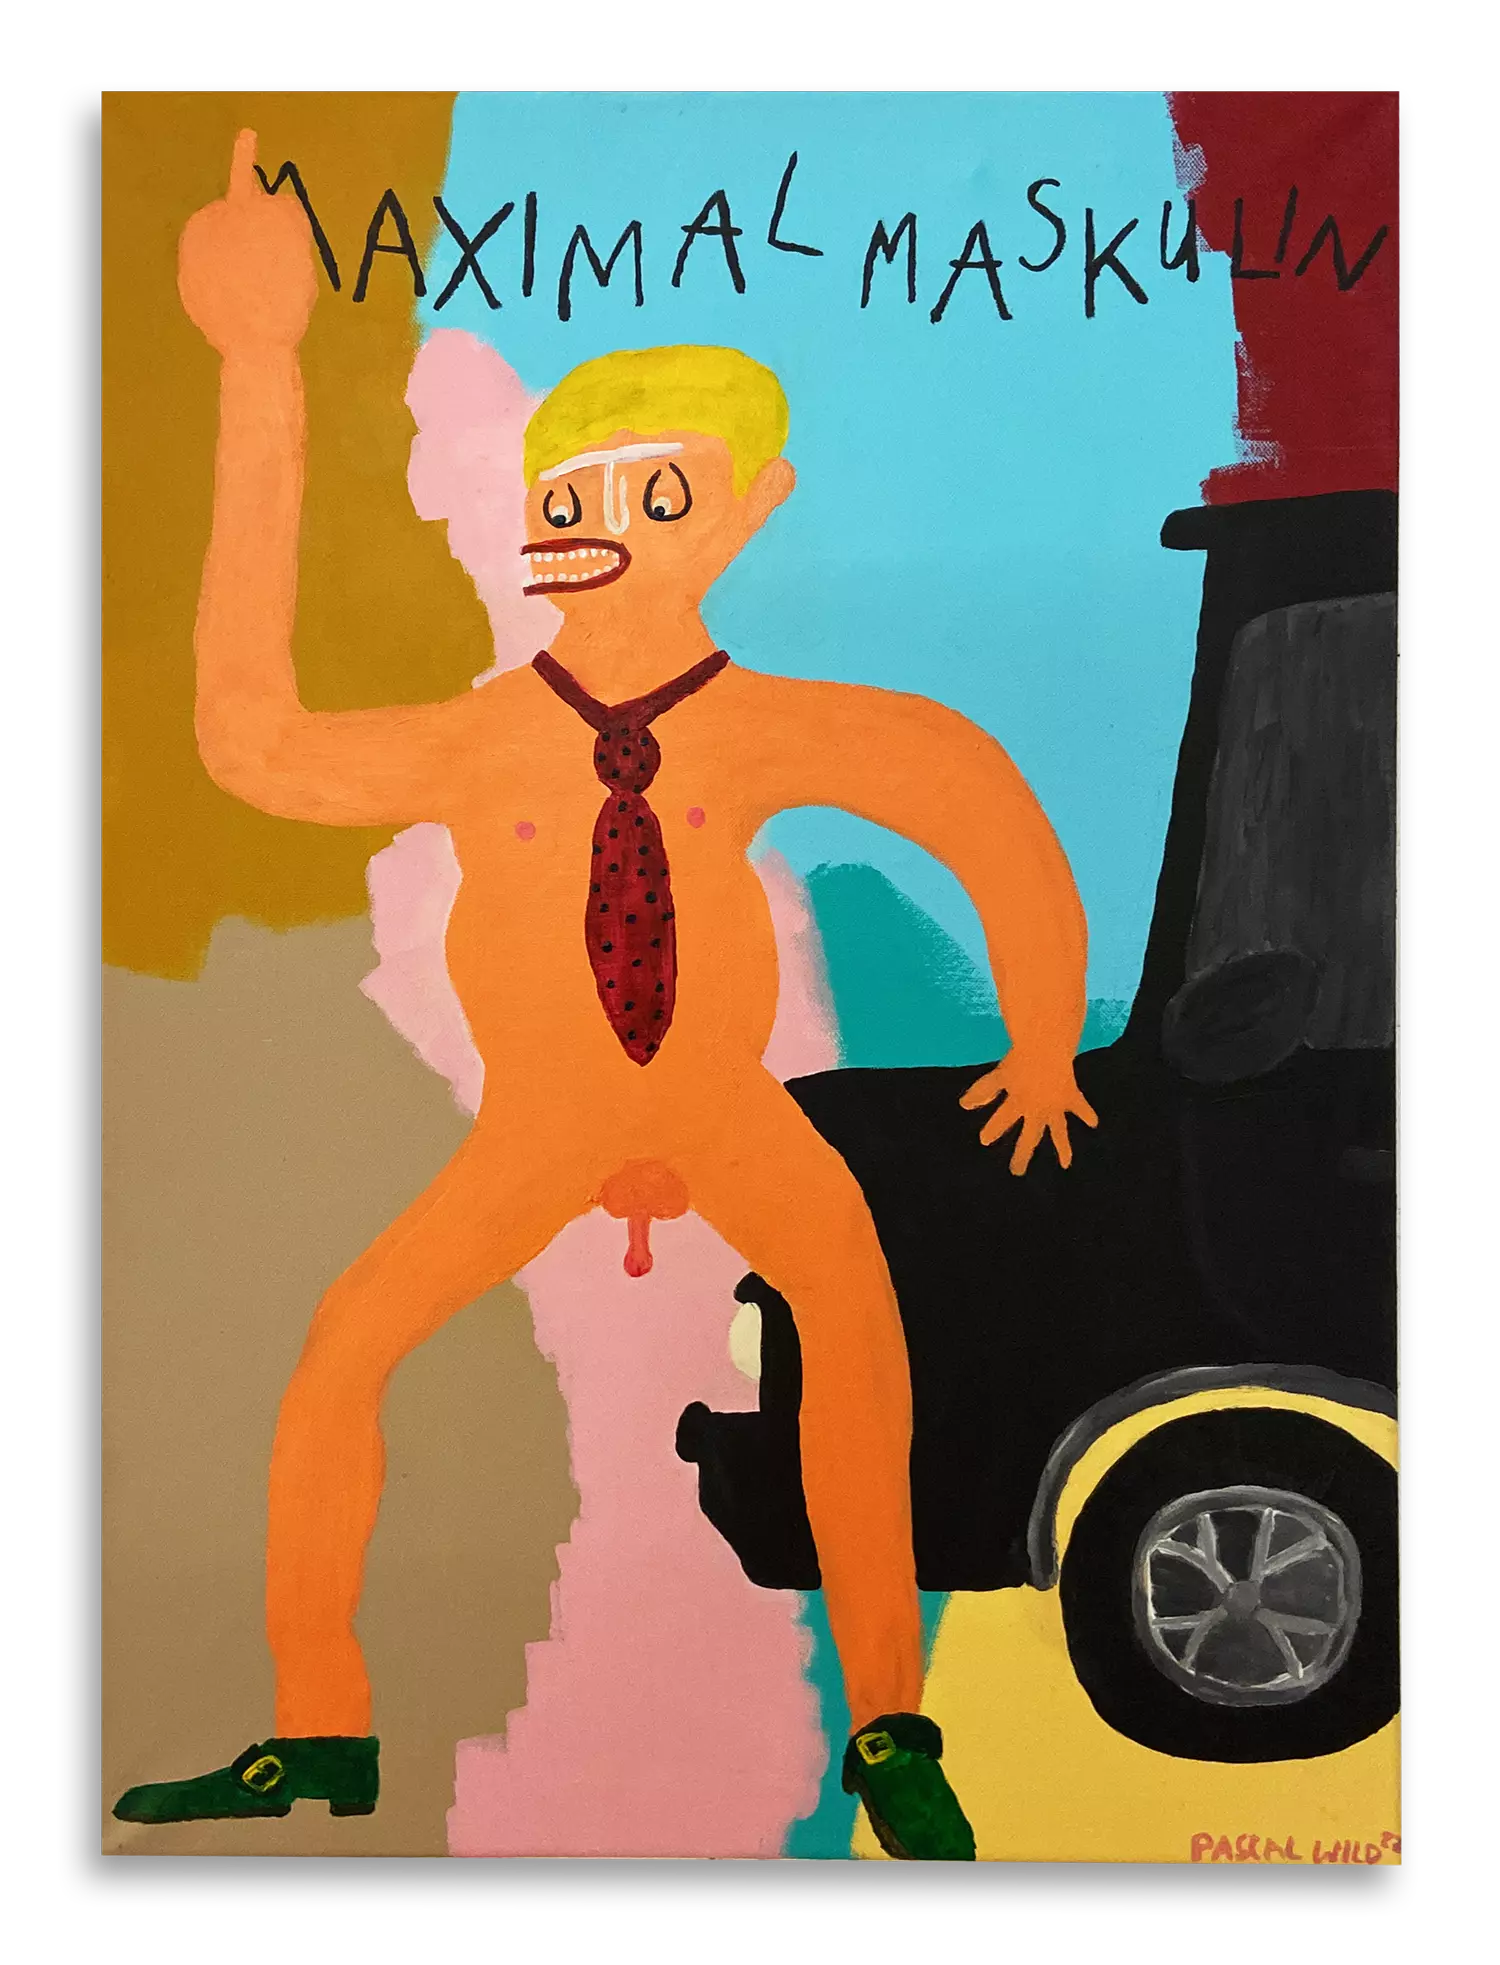 "Maximal Maskulin #6" - Acrylic on Canvas - 70 x 50cm